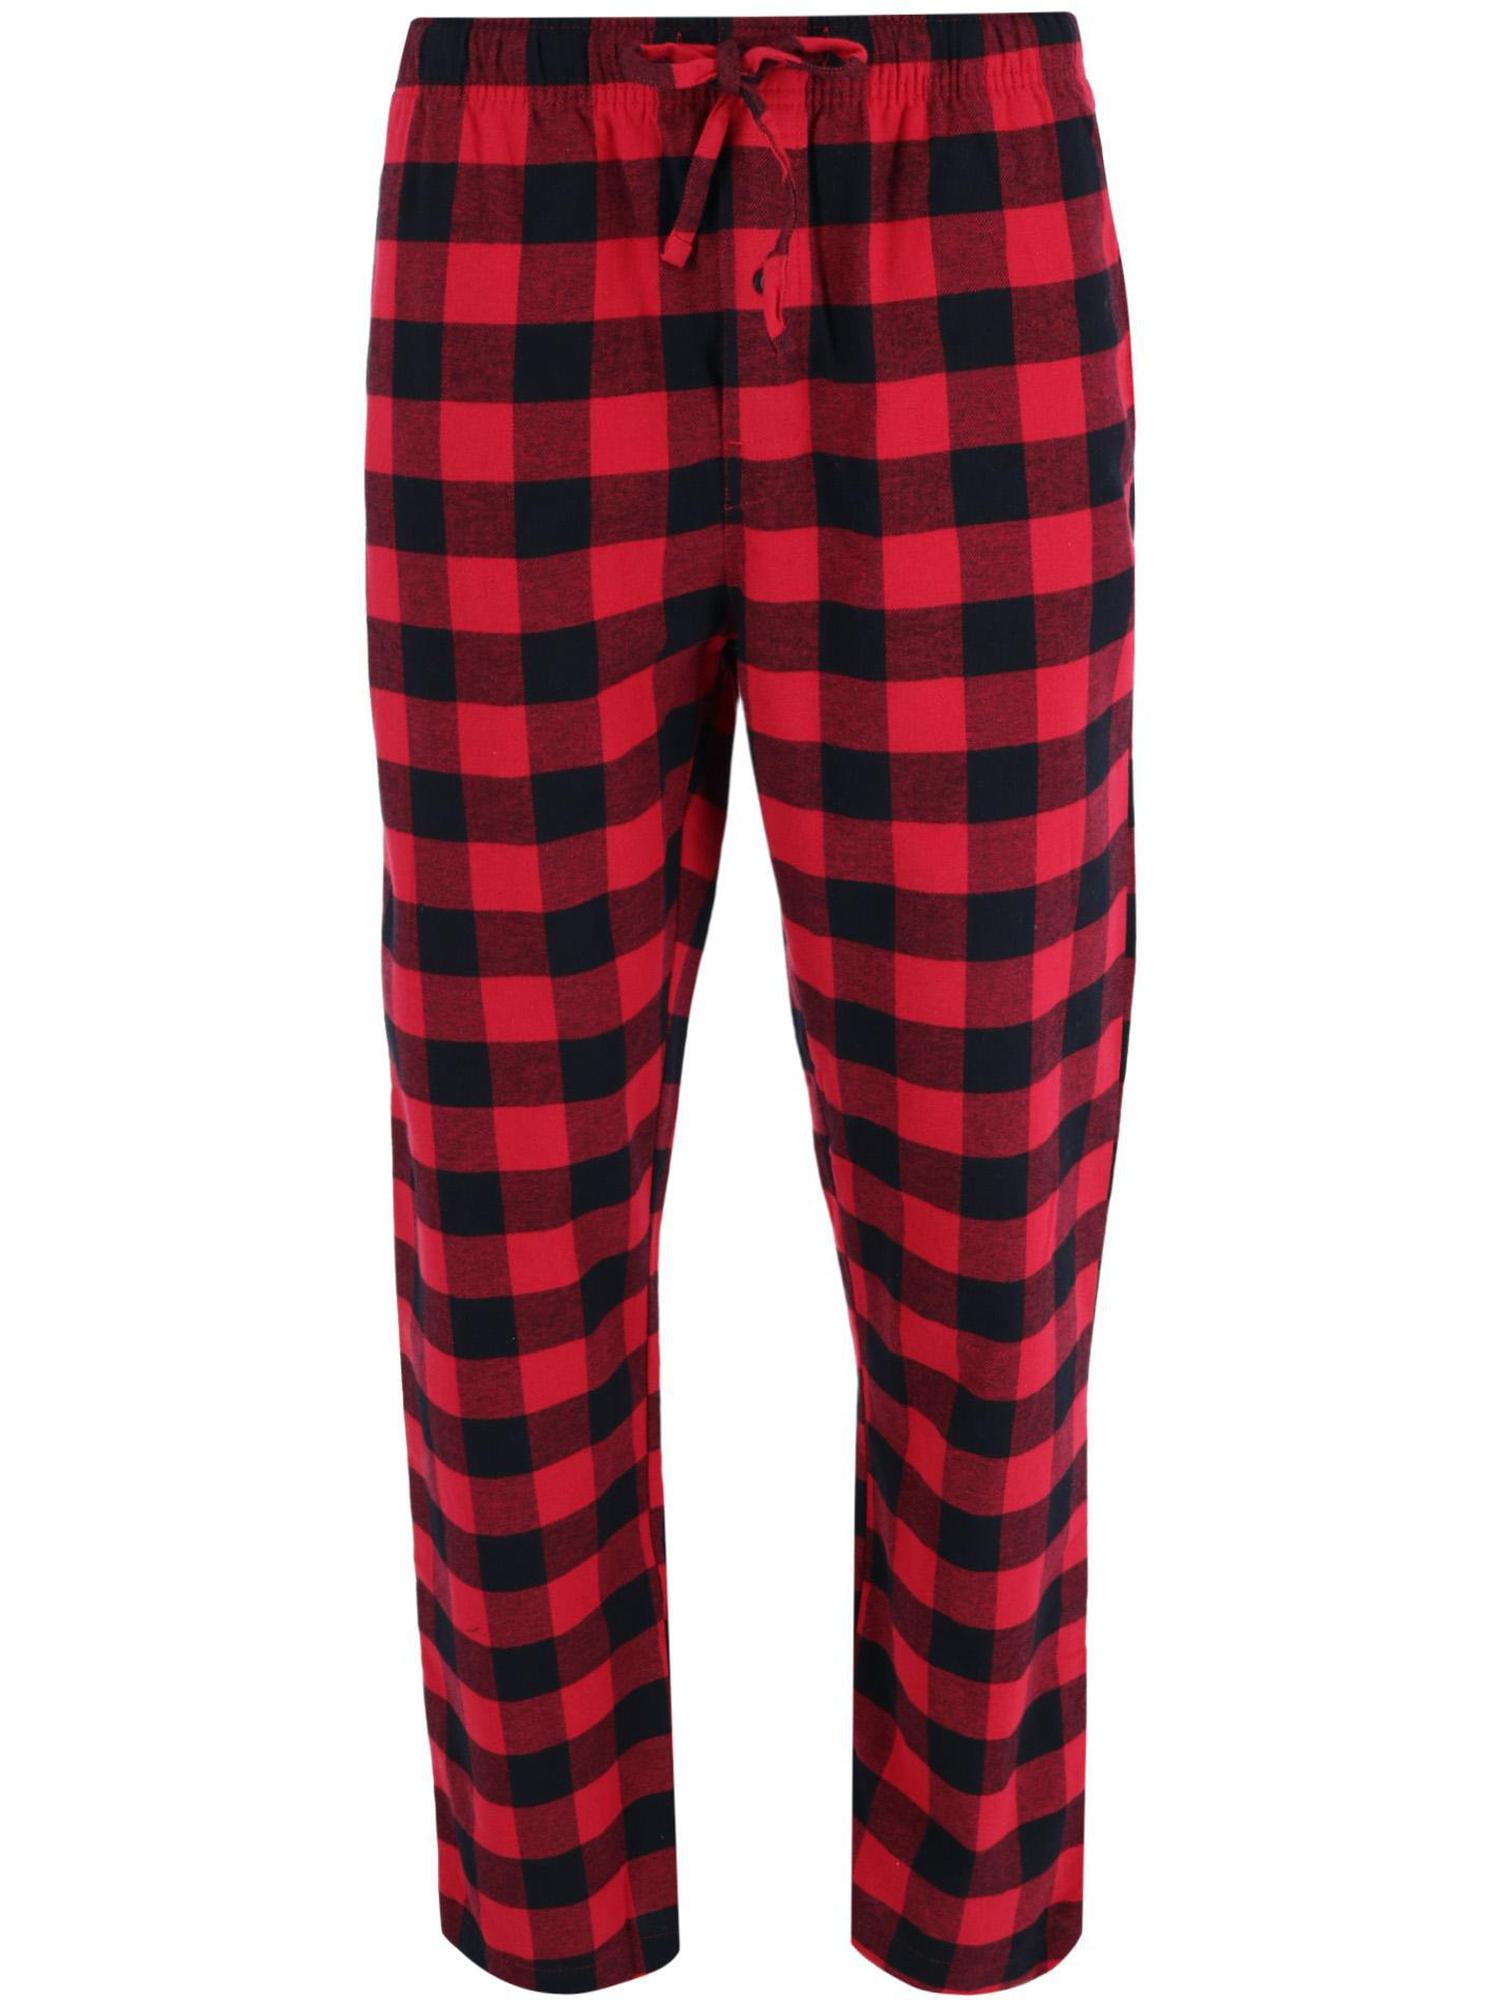 Hanes Flannel Lounge Pajama Pants (Men Big & Tall) - Walmart.com